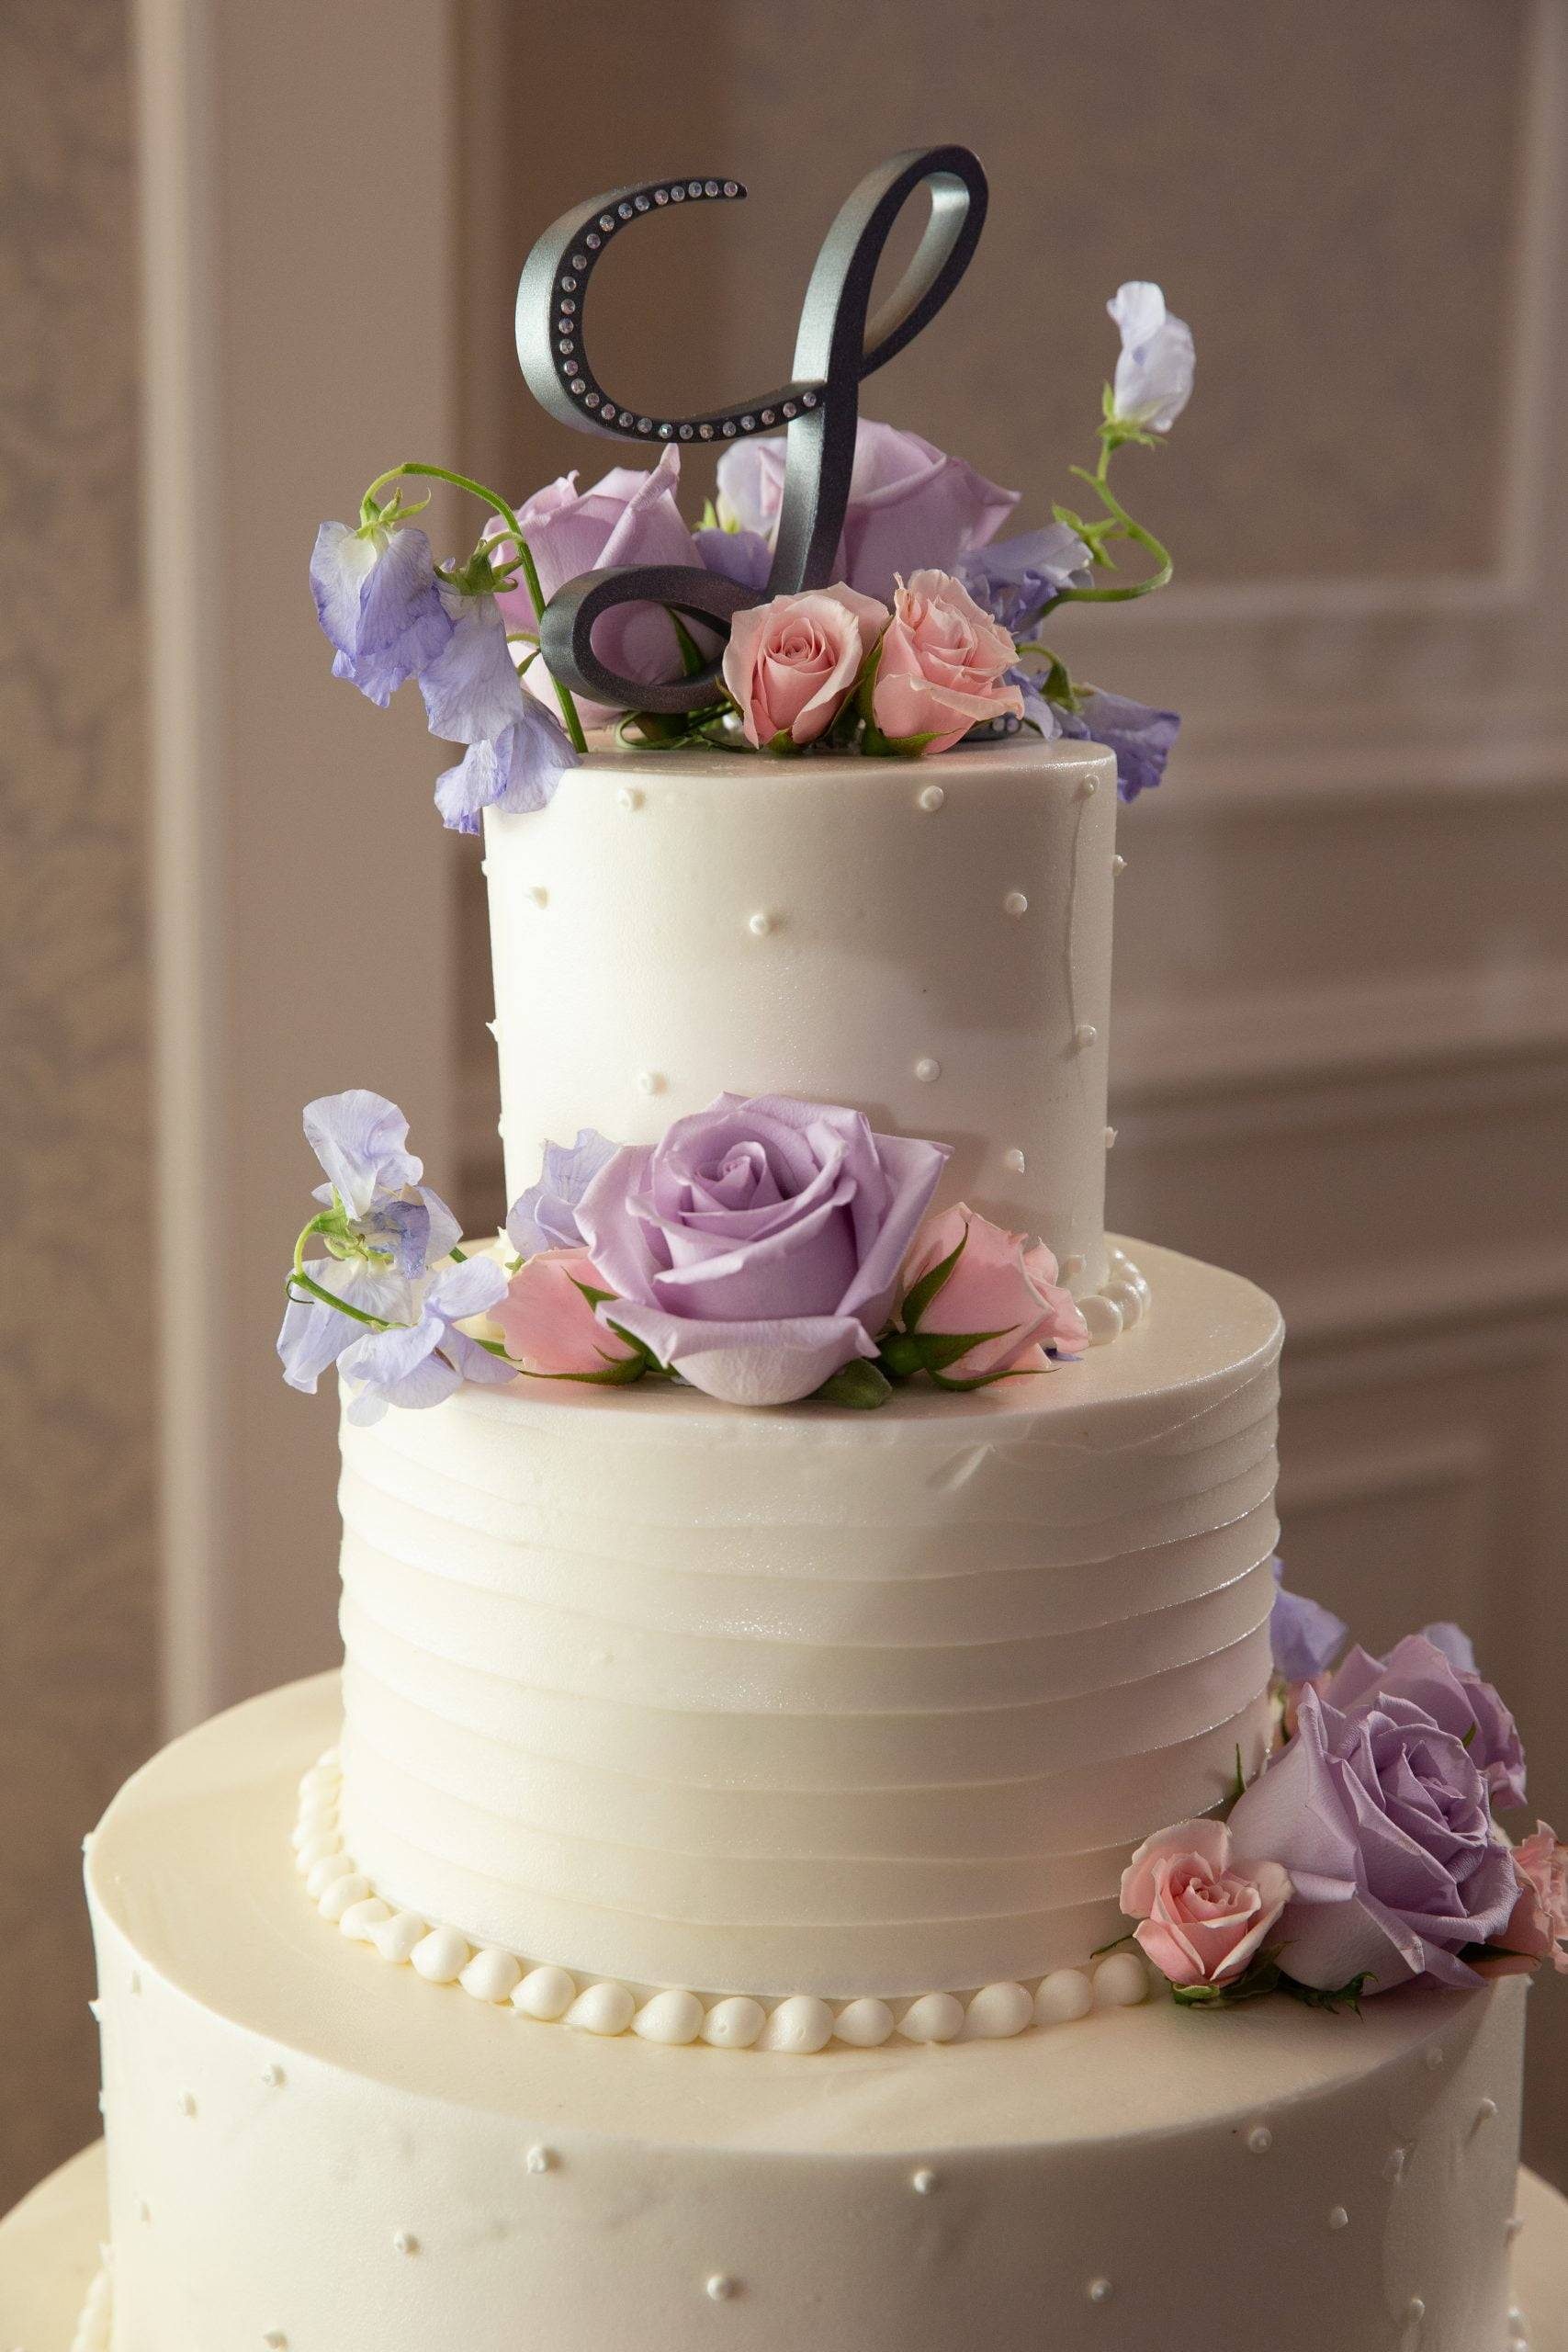 Meadow Wood wedding cake with flowers